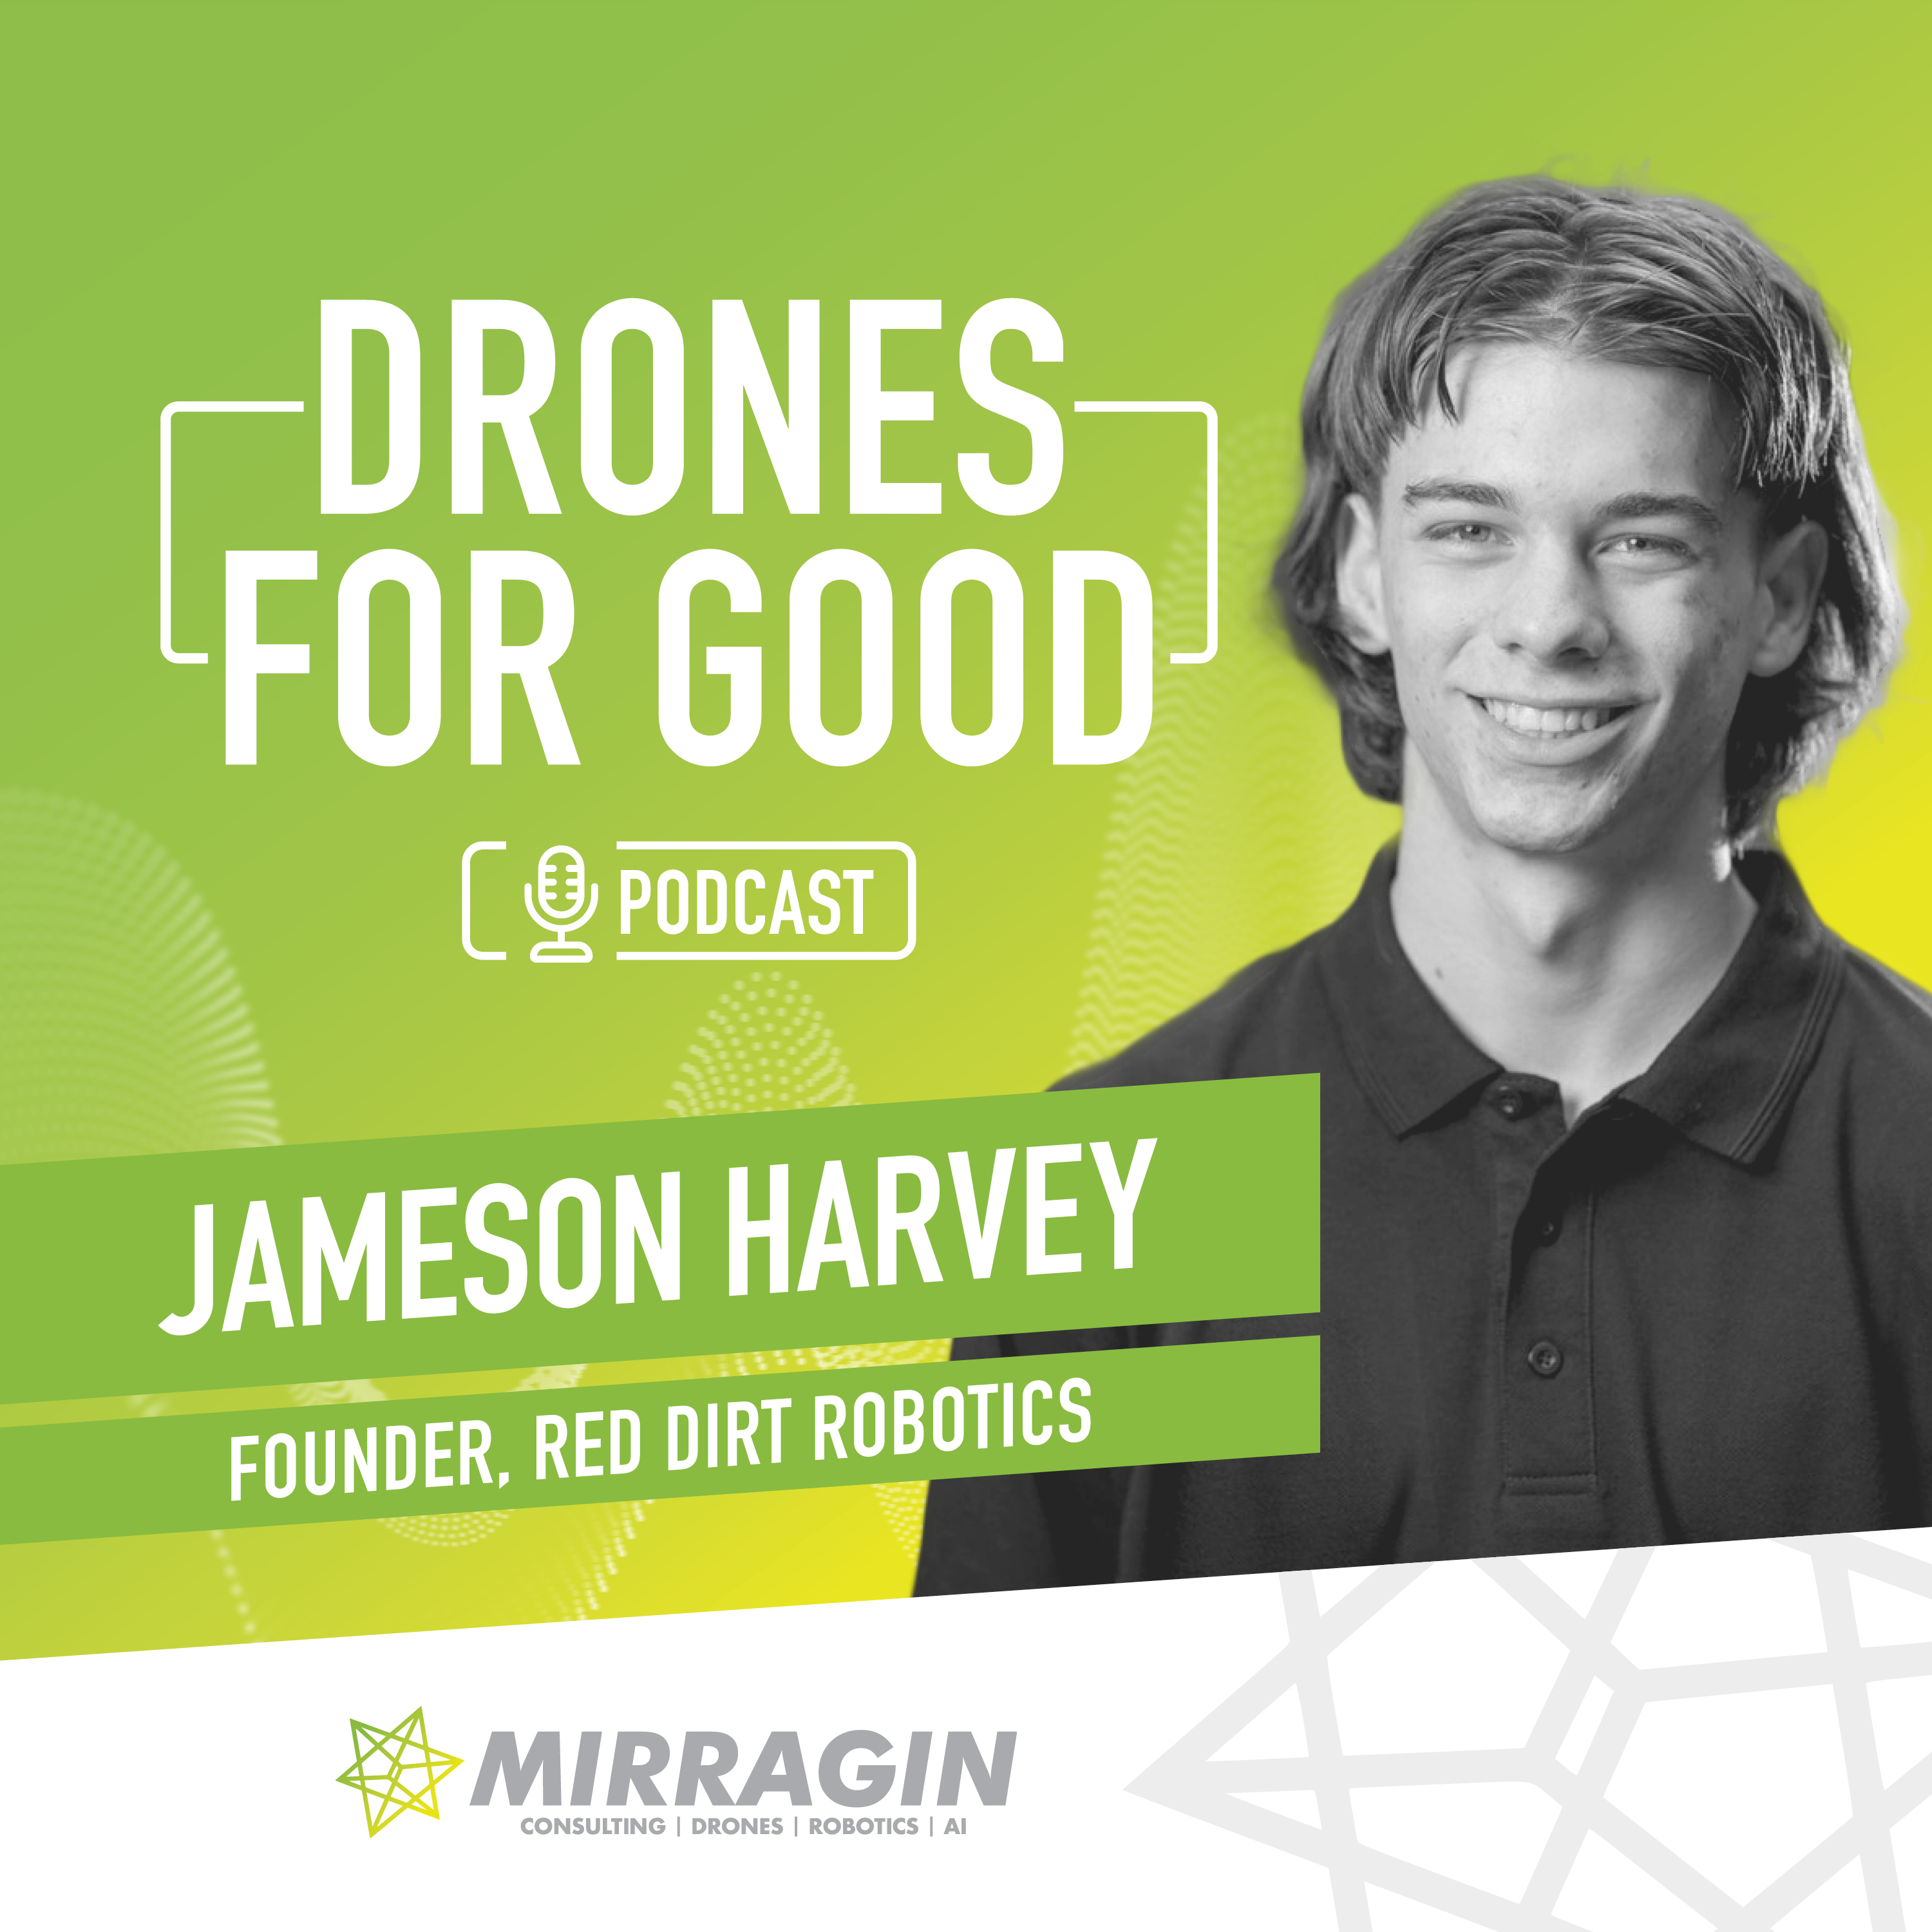 Jameson Harvey - Founder, Red Dirt Robotics